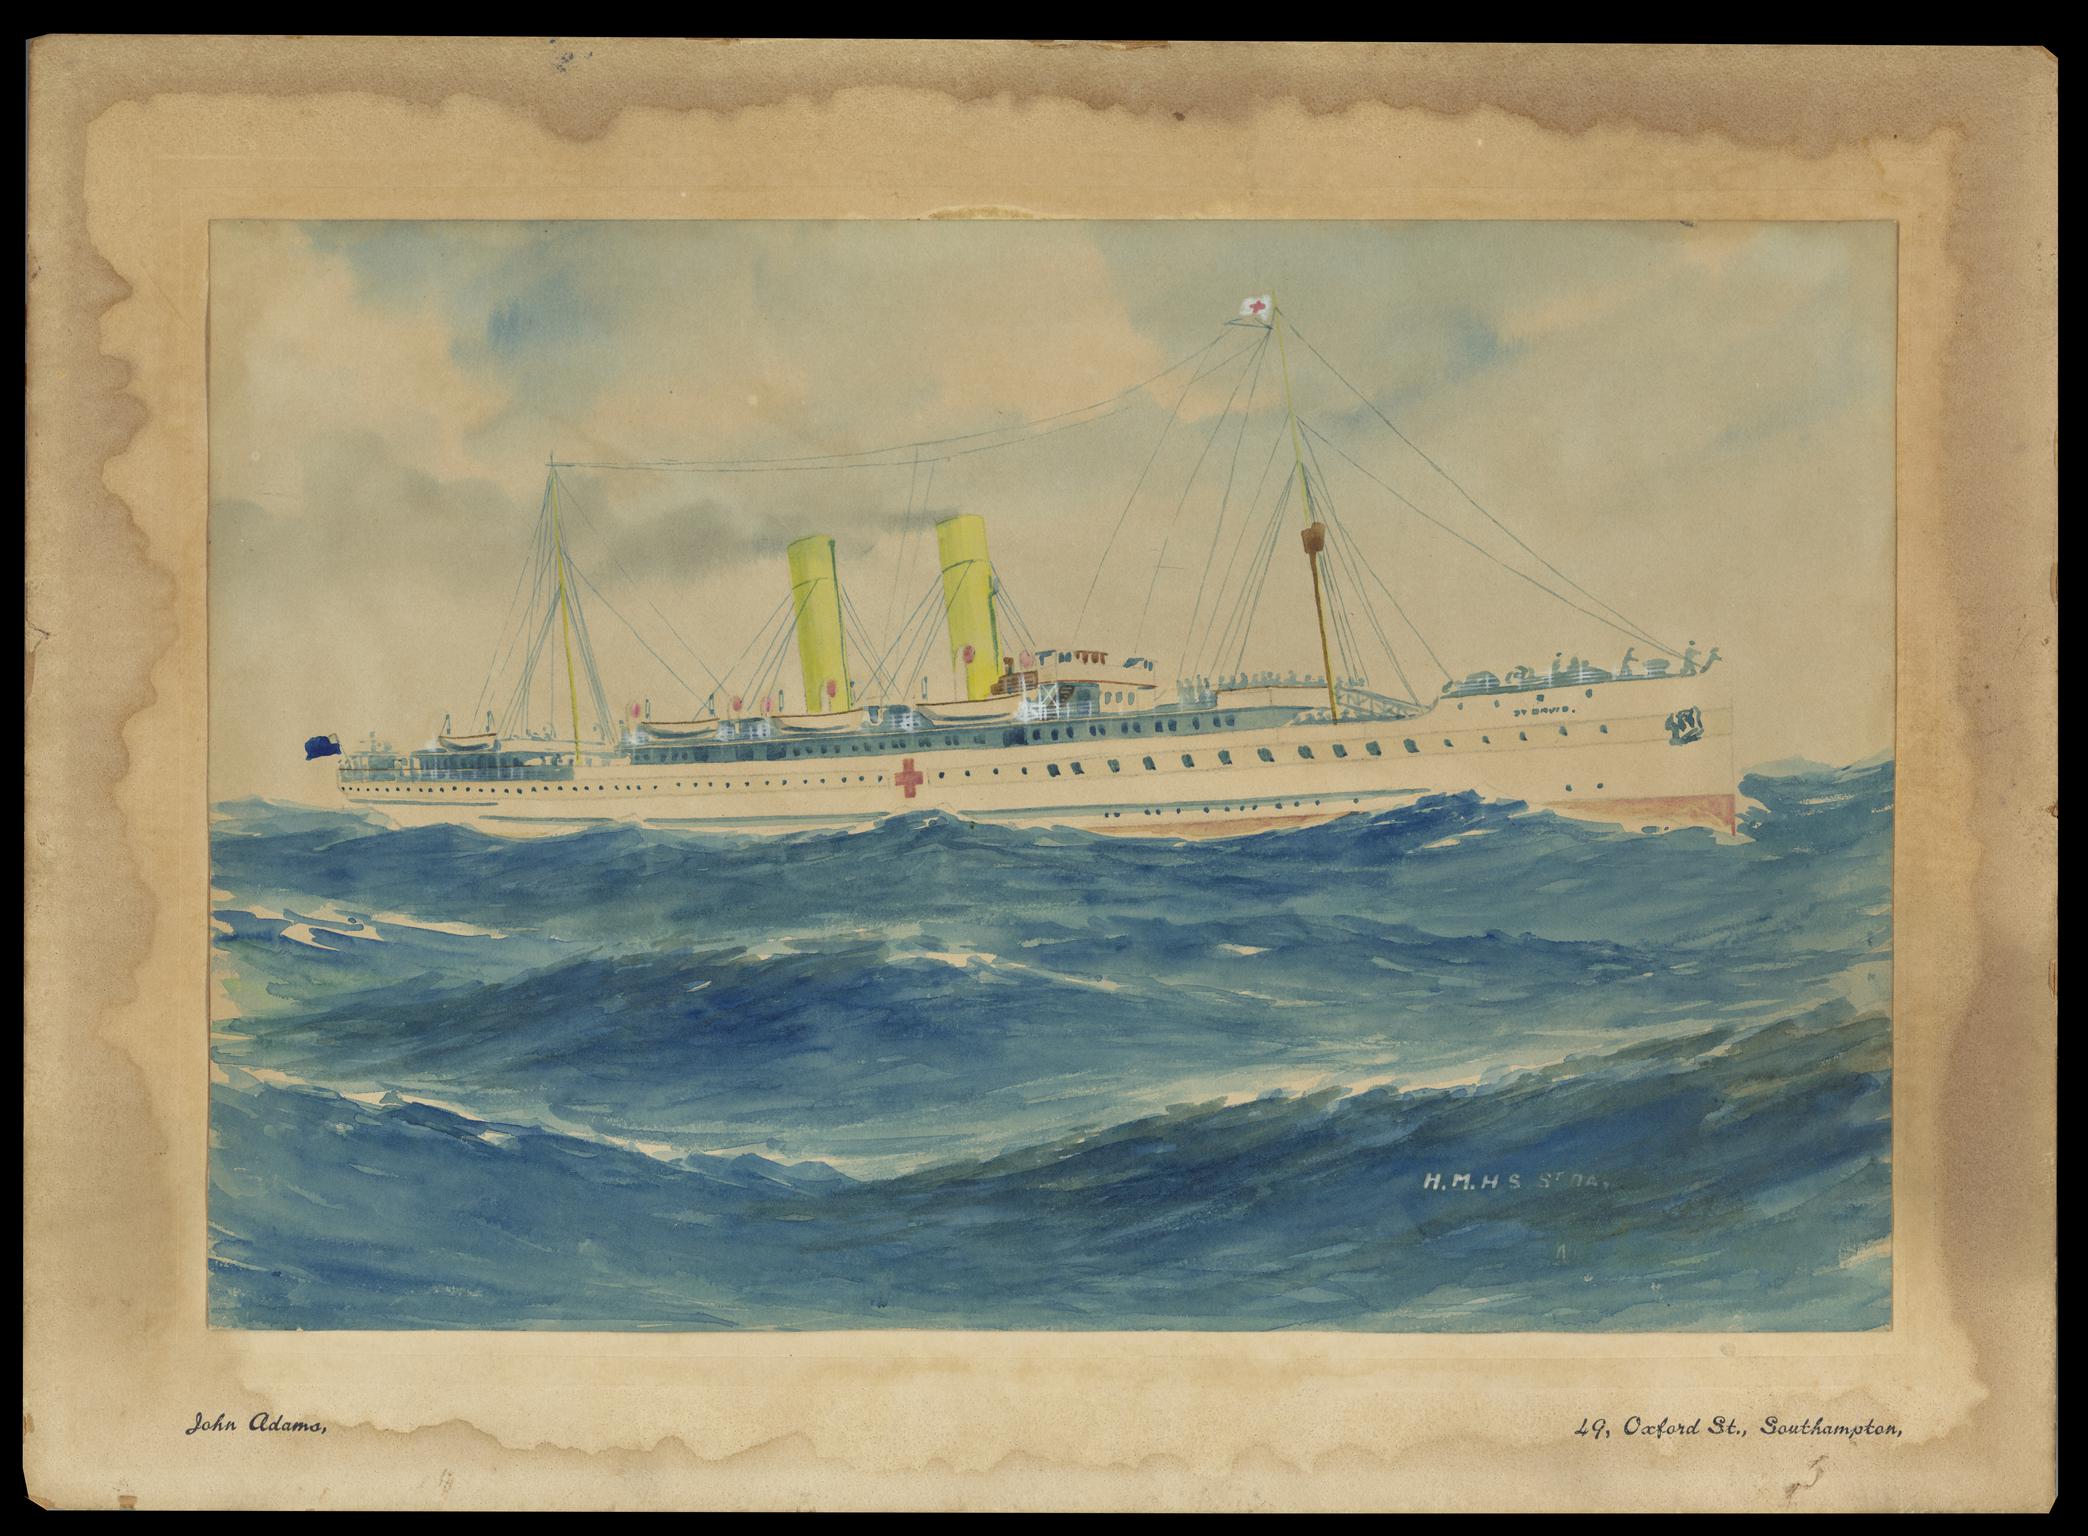 S.S. ST. DAVID - 1st W.W. Hospital Ship (painting)